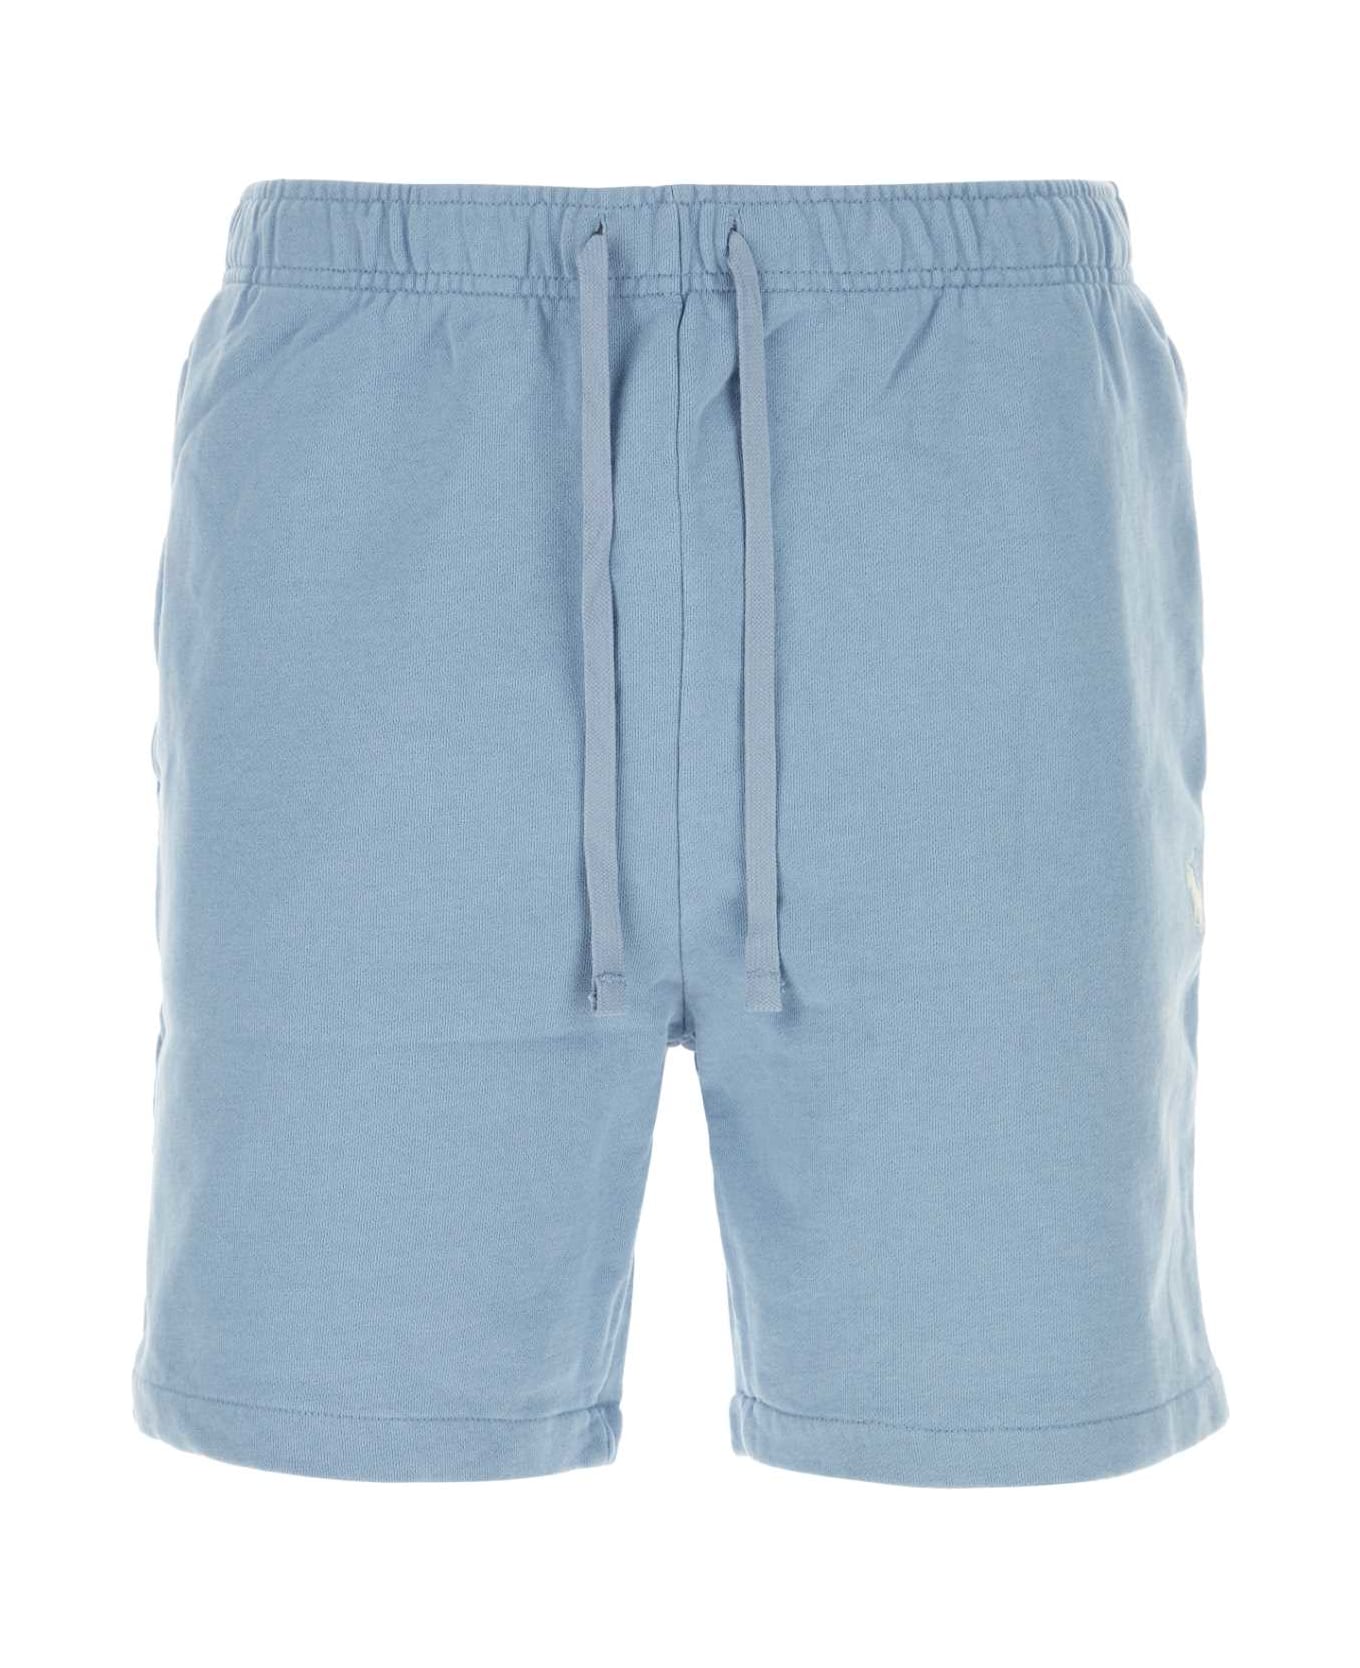 Polo Ralph Lauren Light Blue Cotton Bermuda Shorts - BLUE